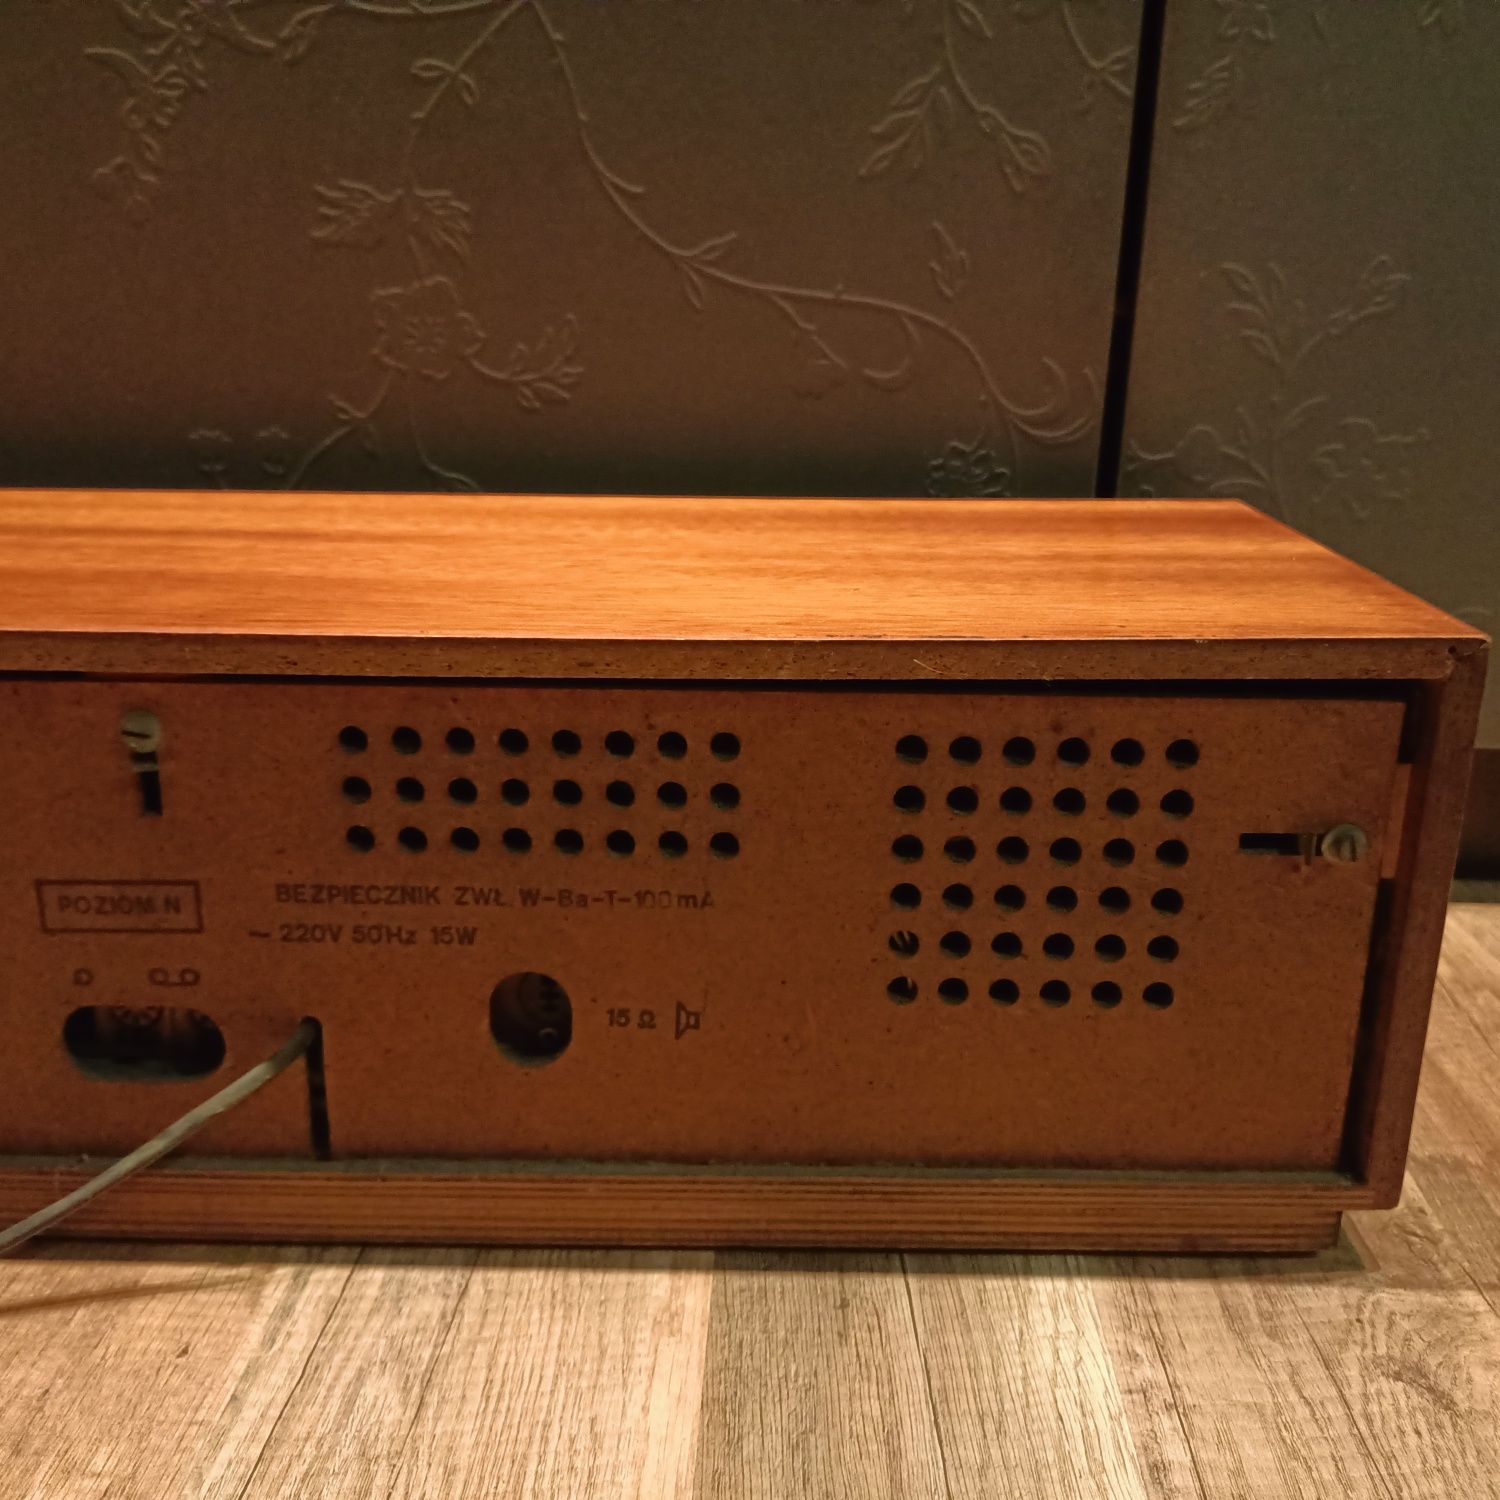 Radio UNITRA Diora Ślęża radioodbiornik